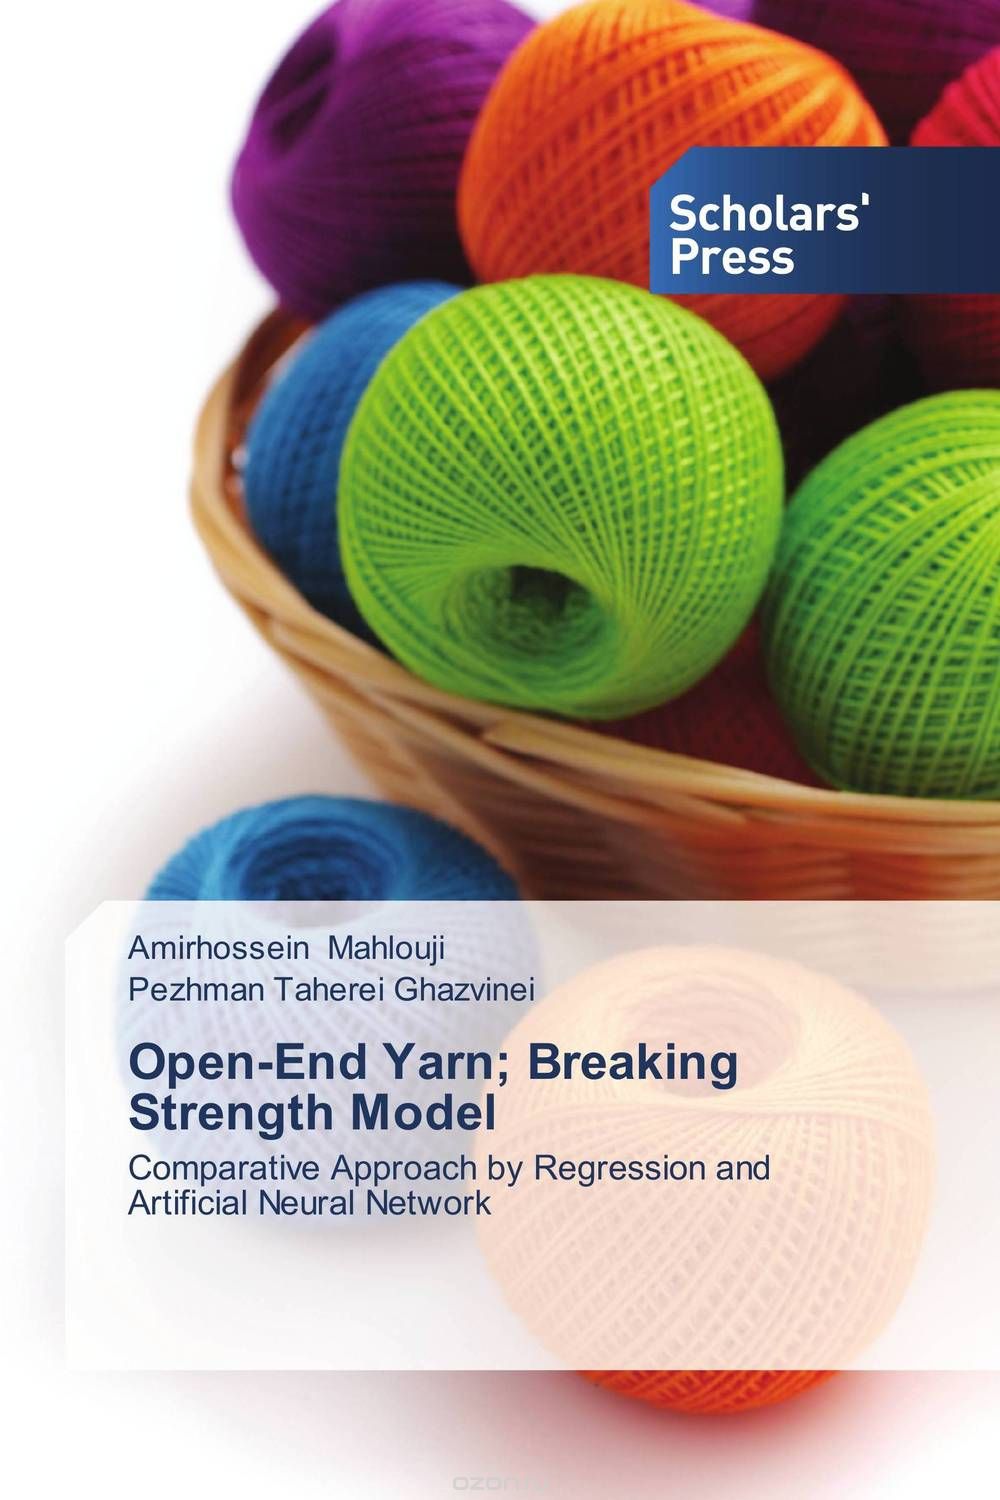 Скачать книгу "Open-End Yarn; Breaking Strength Model"